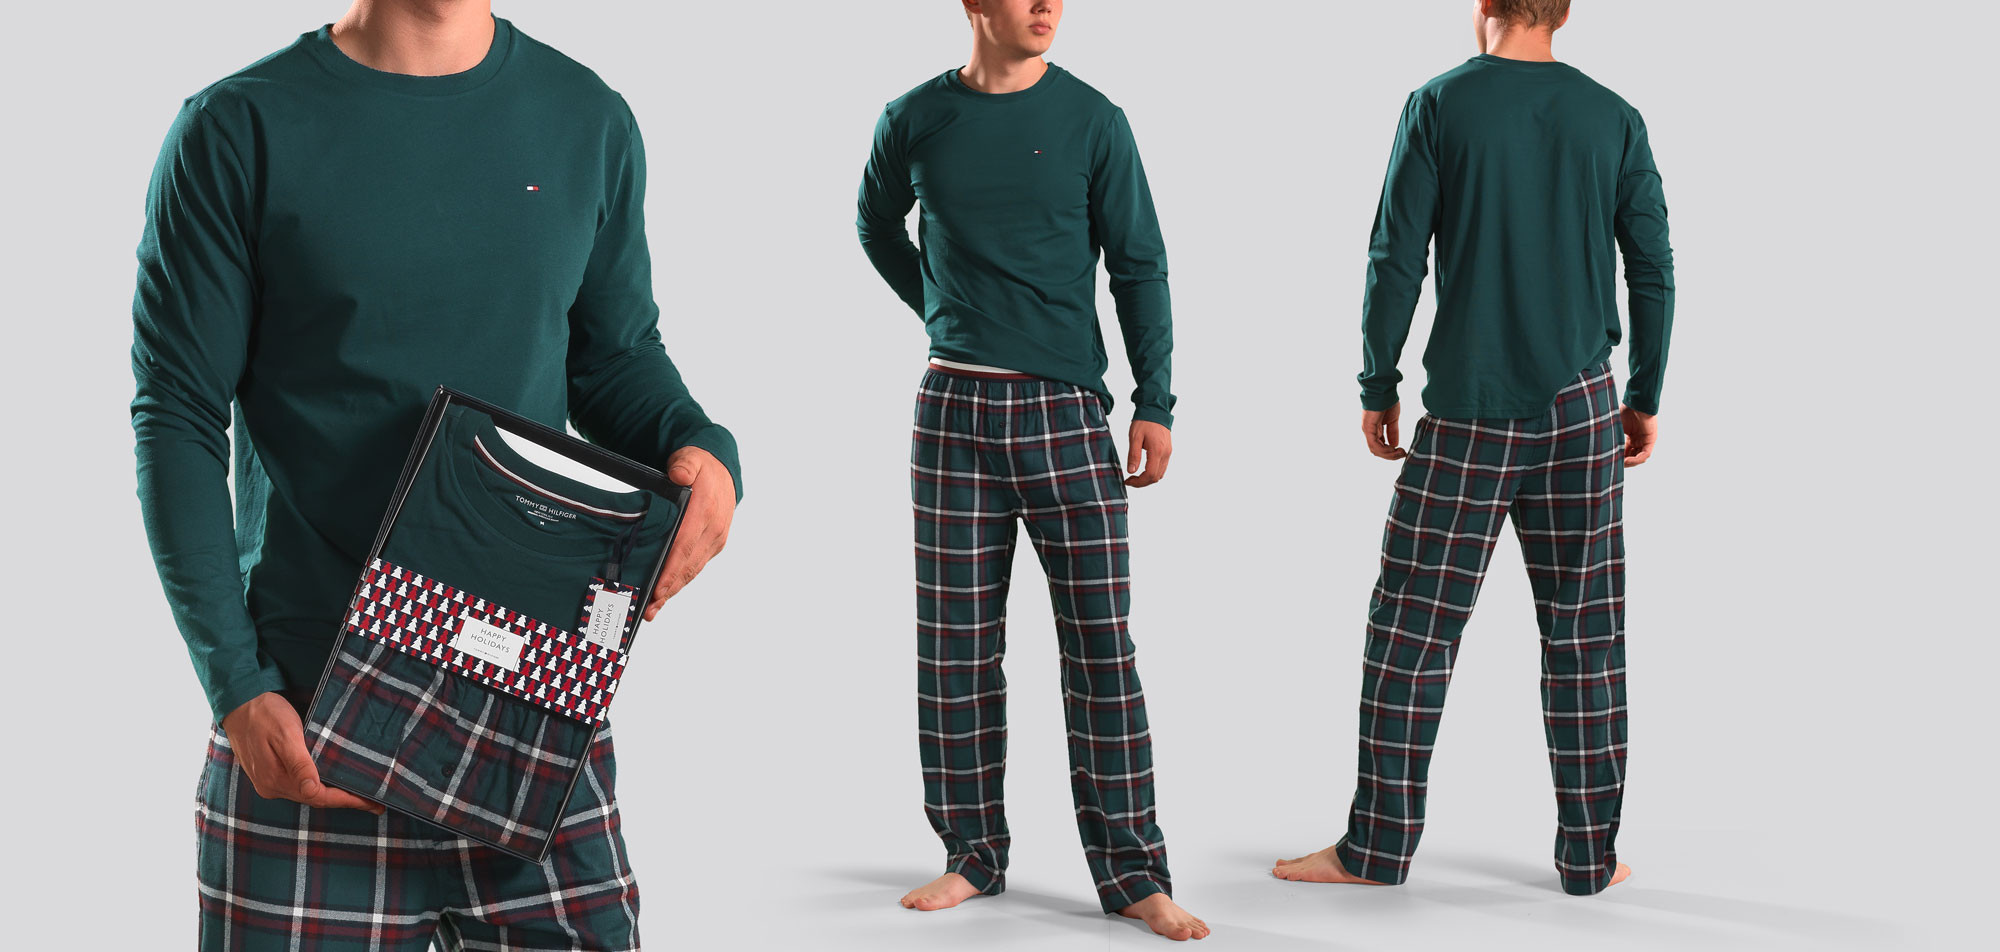 Pyjama - Pant Set 995 Tommy LS Yourunderwearstore PJ Hilfiger